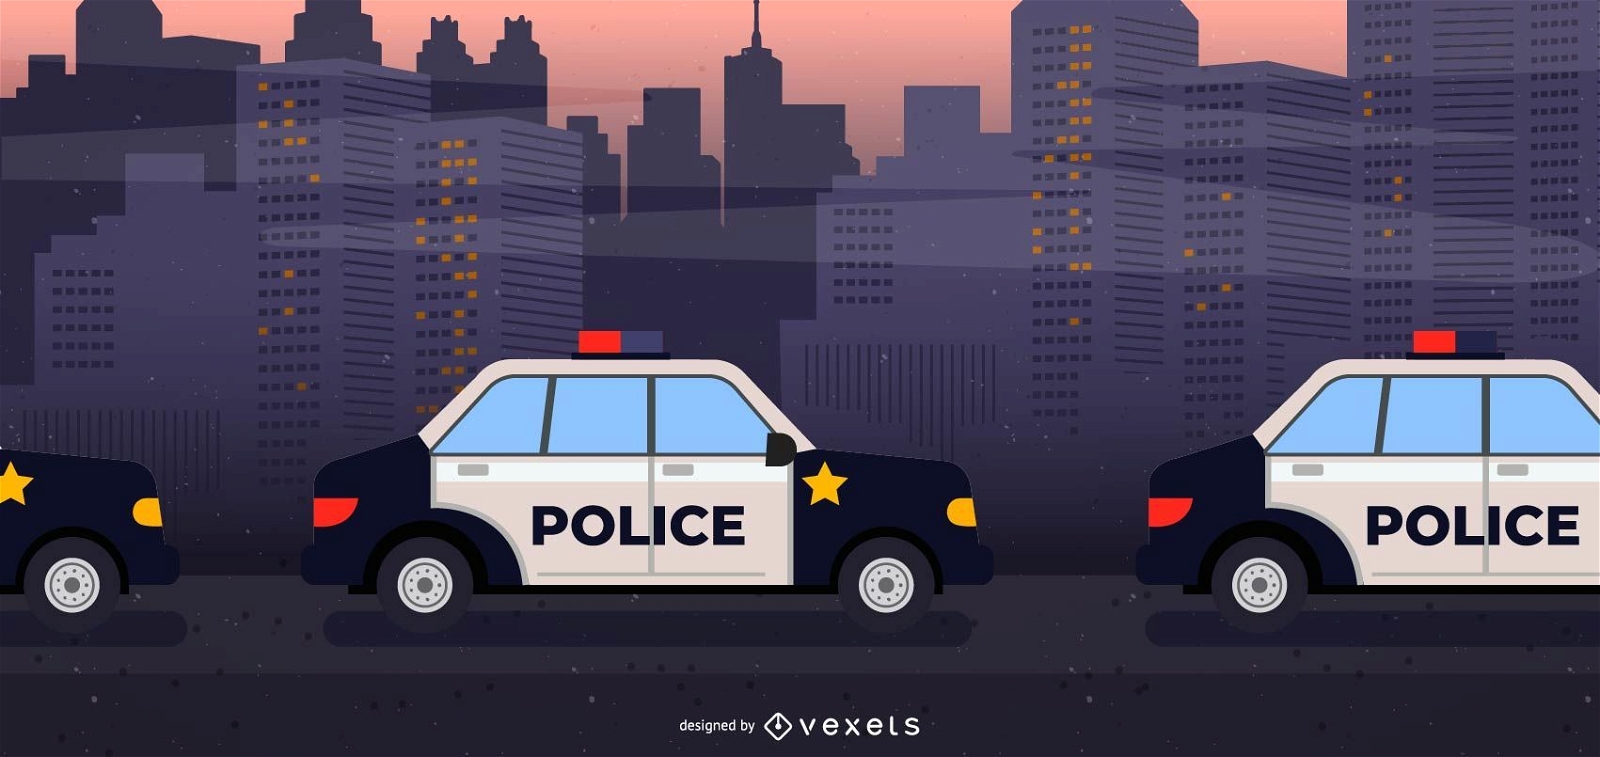 Police Cars In Line Illustration